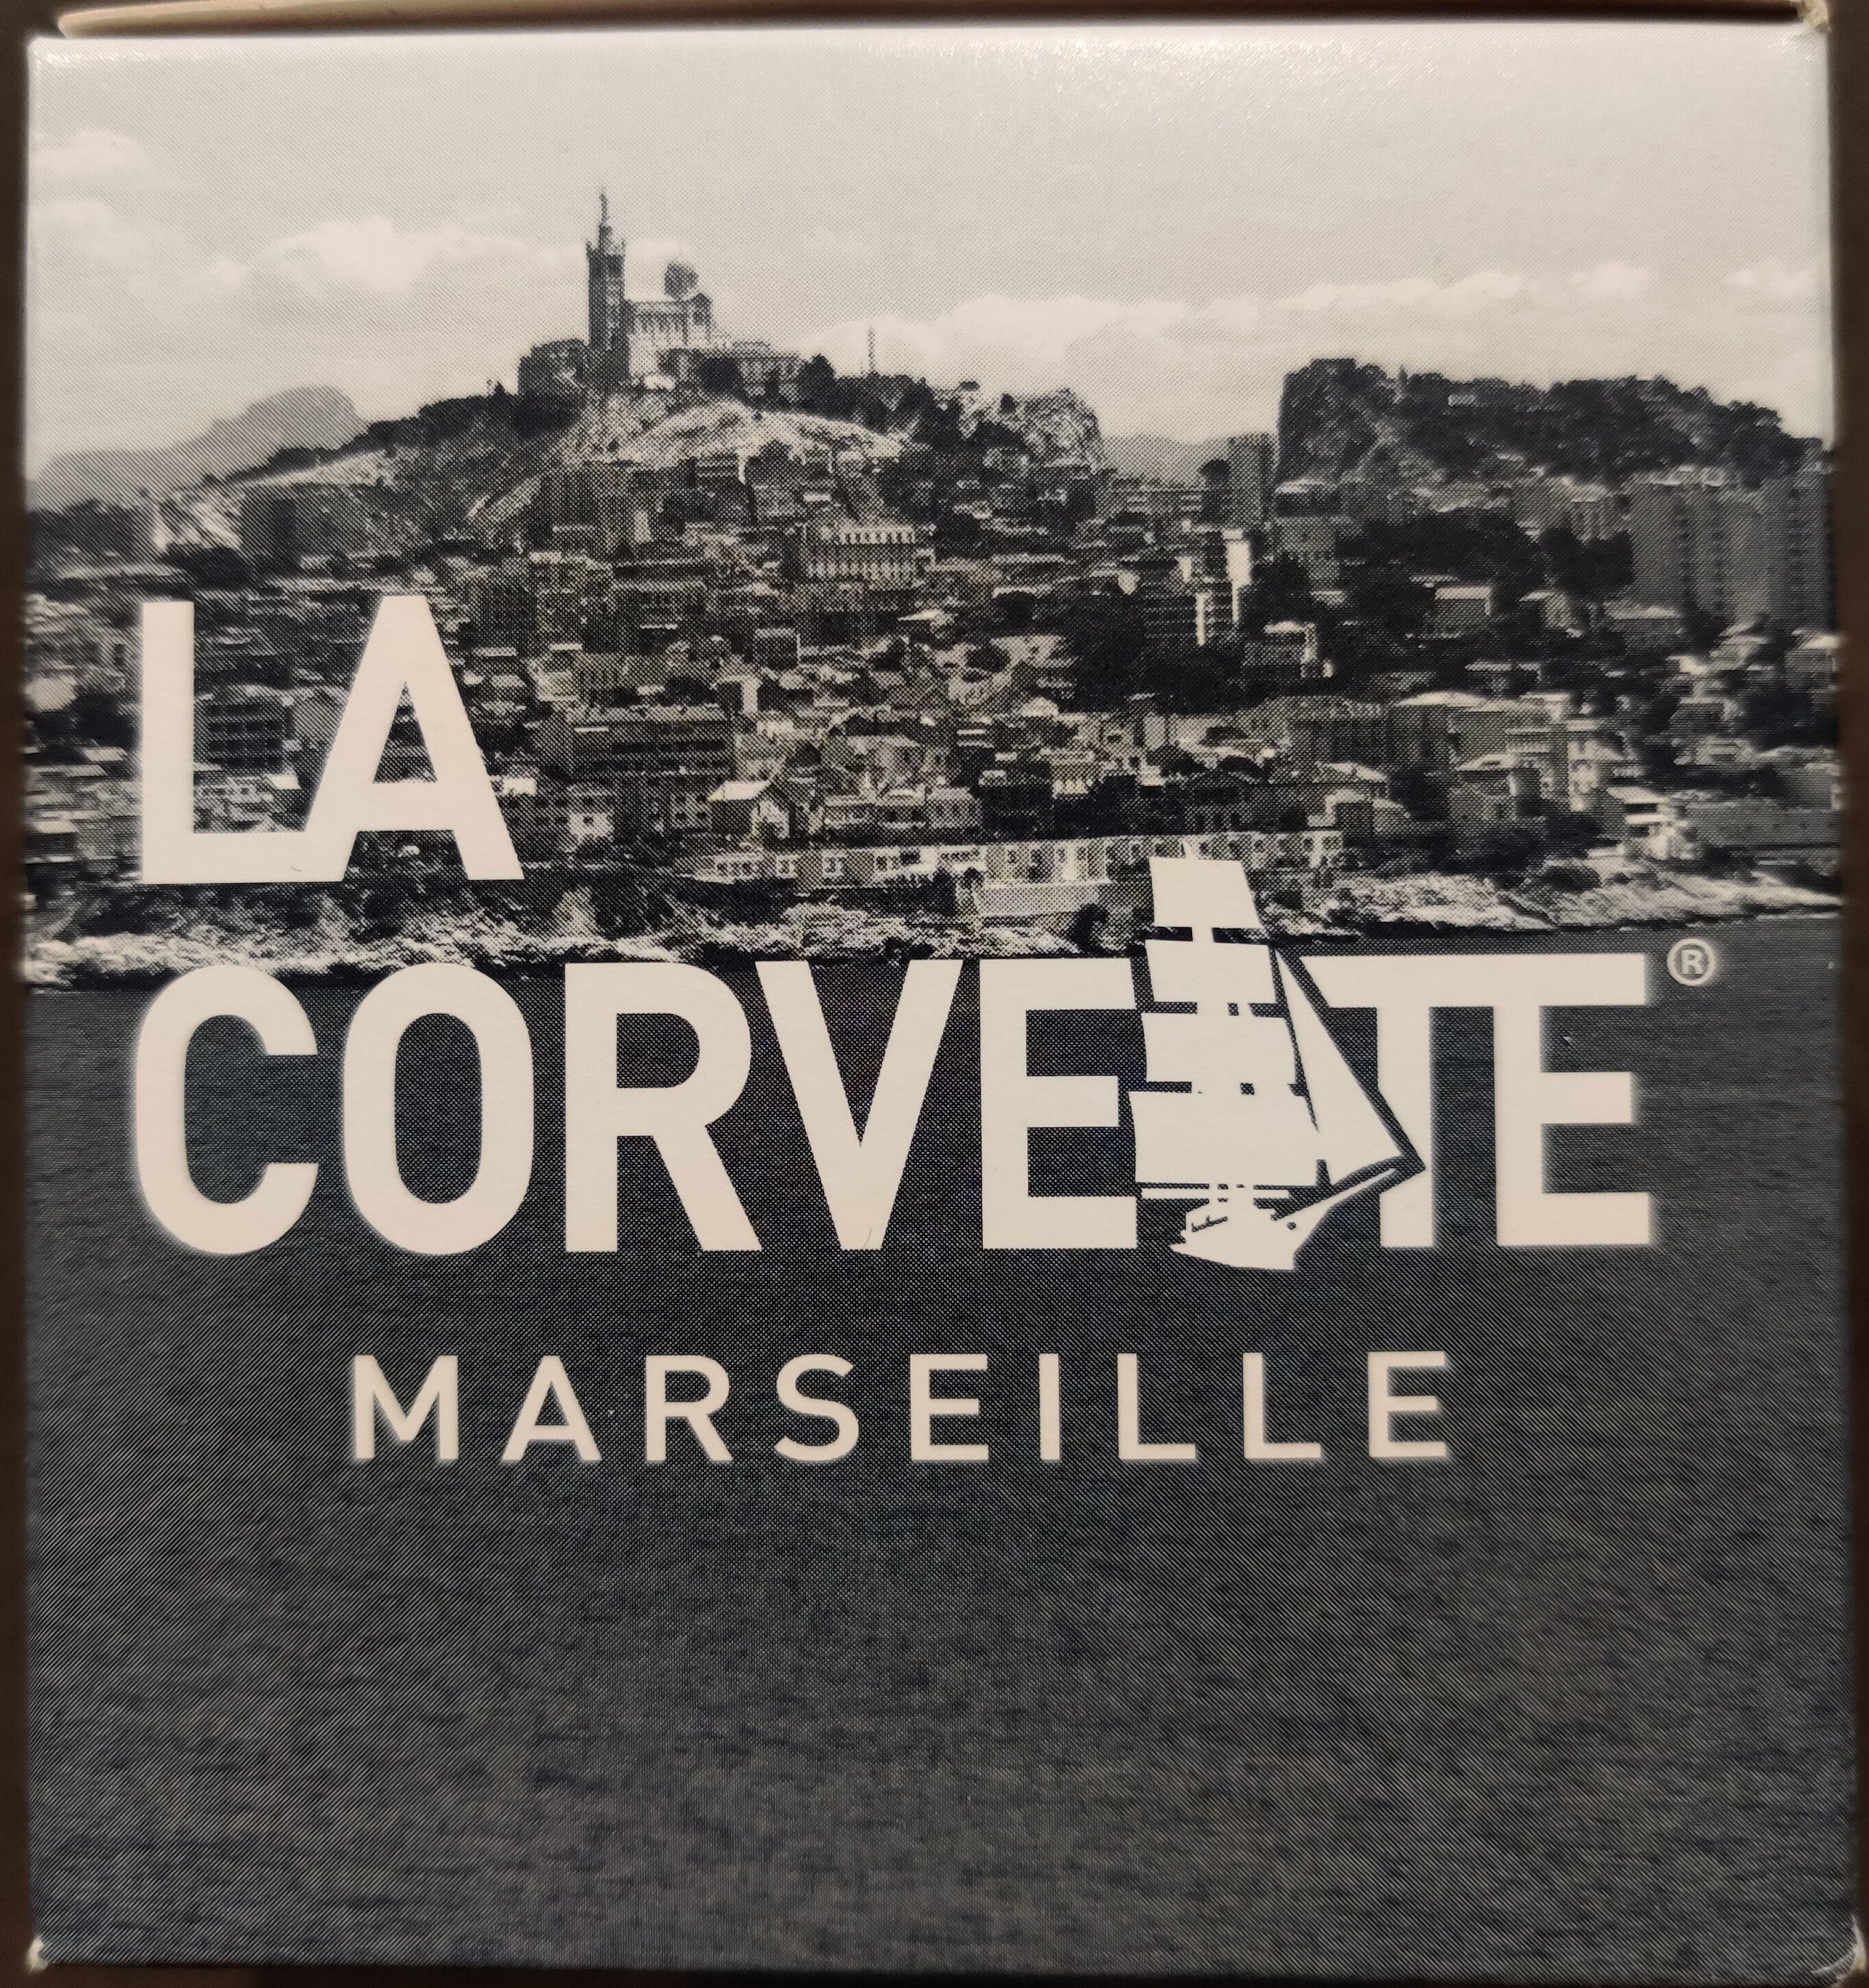 Savon de Marseille - Produit - fr